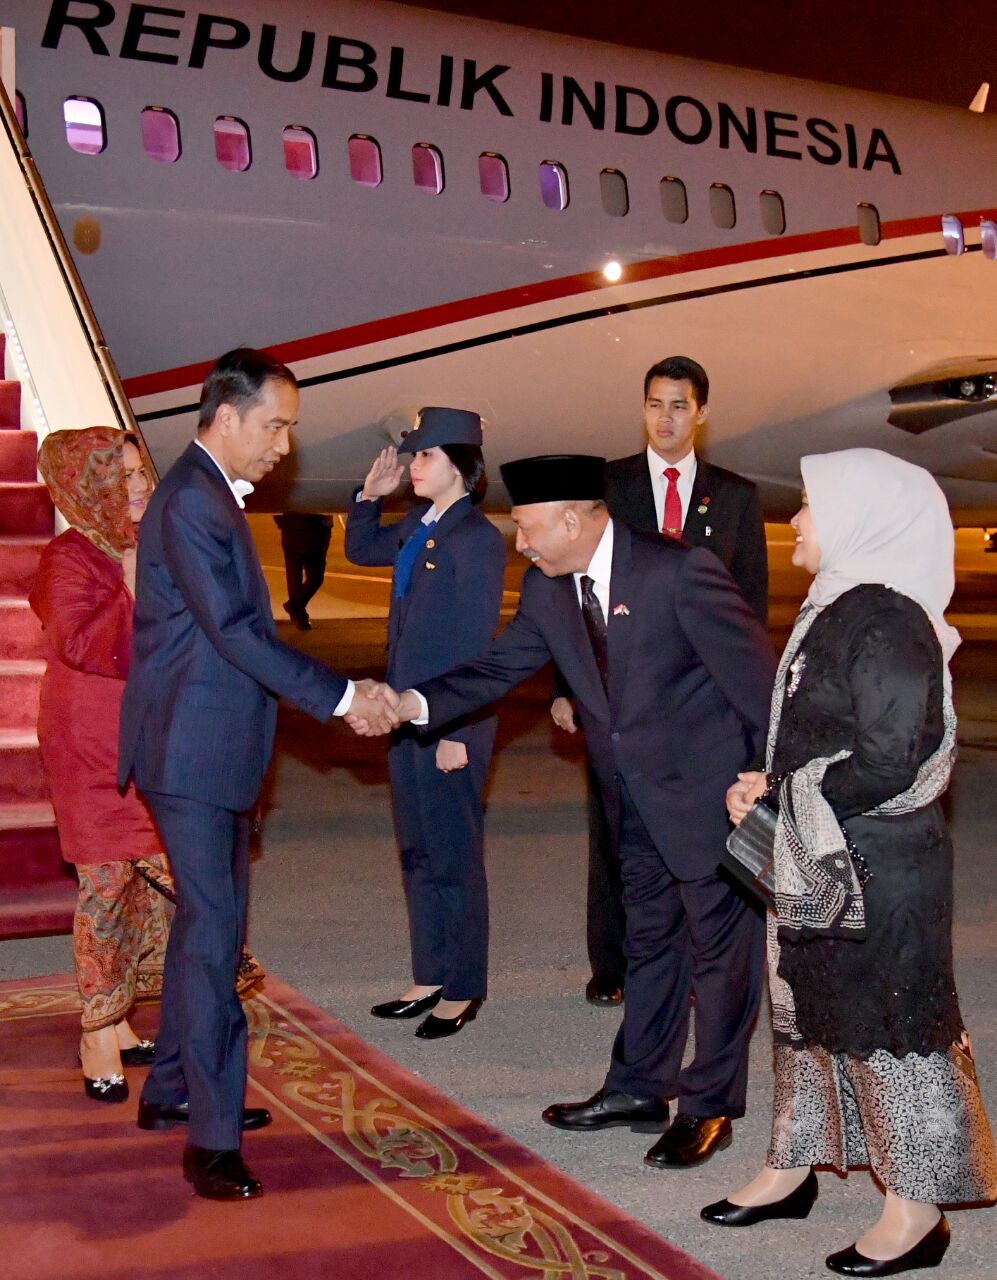 Duta Besar Indonesia untuk Turki, Wardana mengantar kepulangan Presiden Jokowi di Bandara Ataturk, Turki kemarin, 13 Desember 2017 (Foto:Sekretariat Presiden)